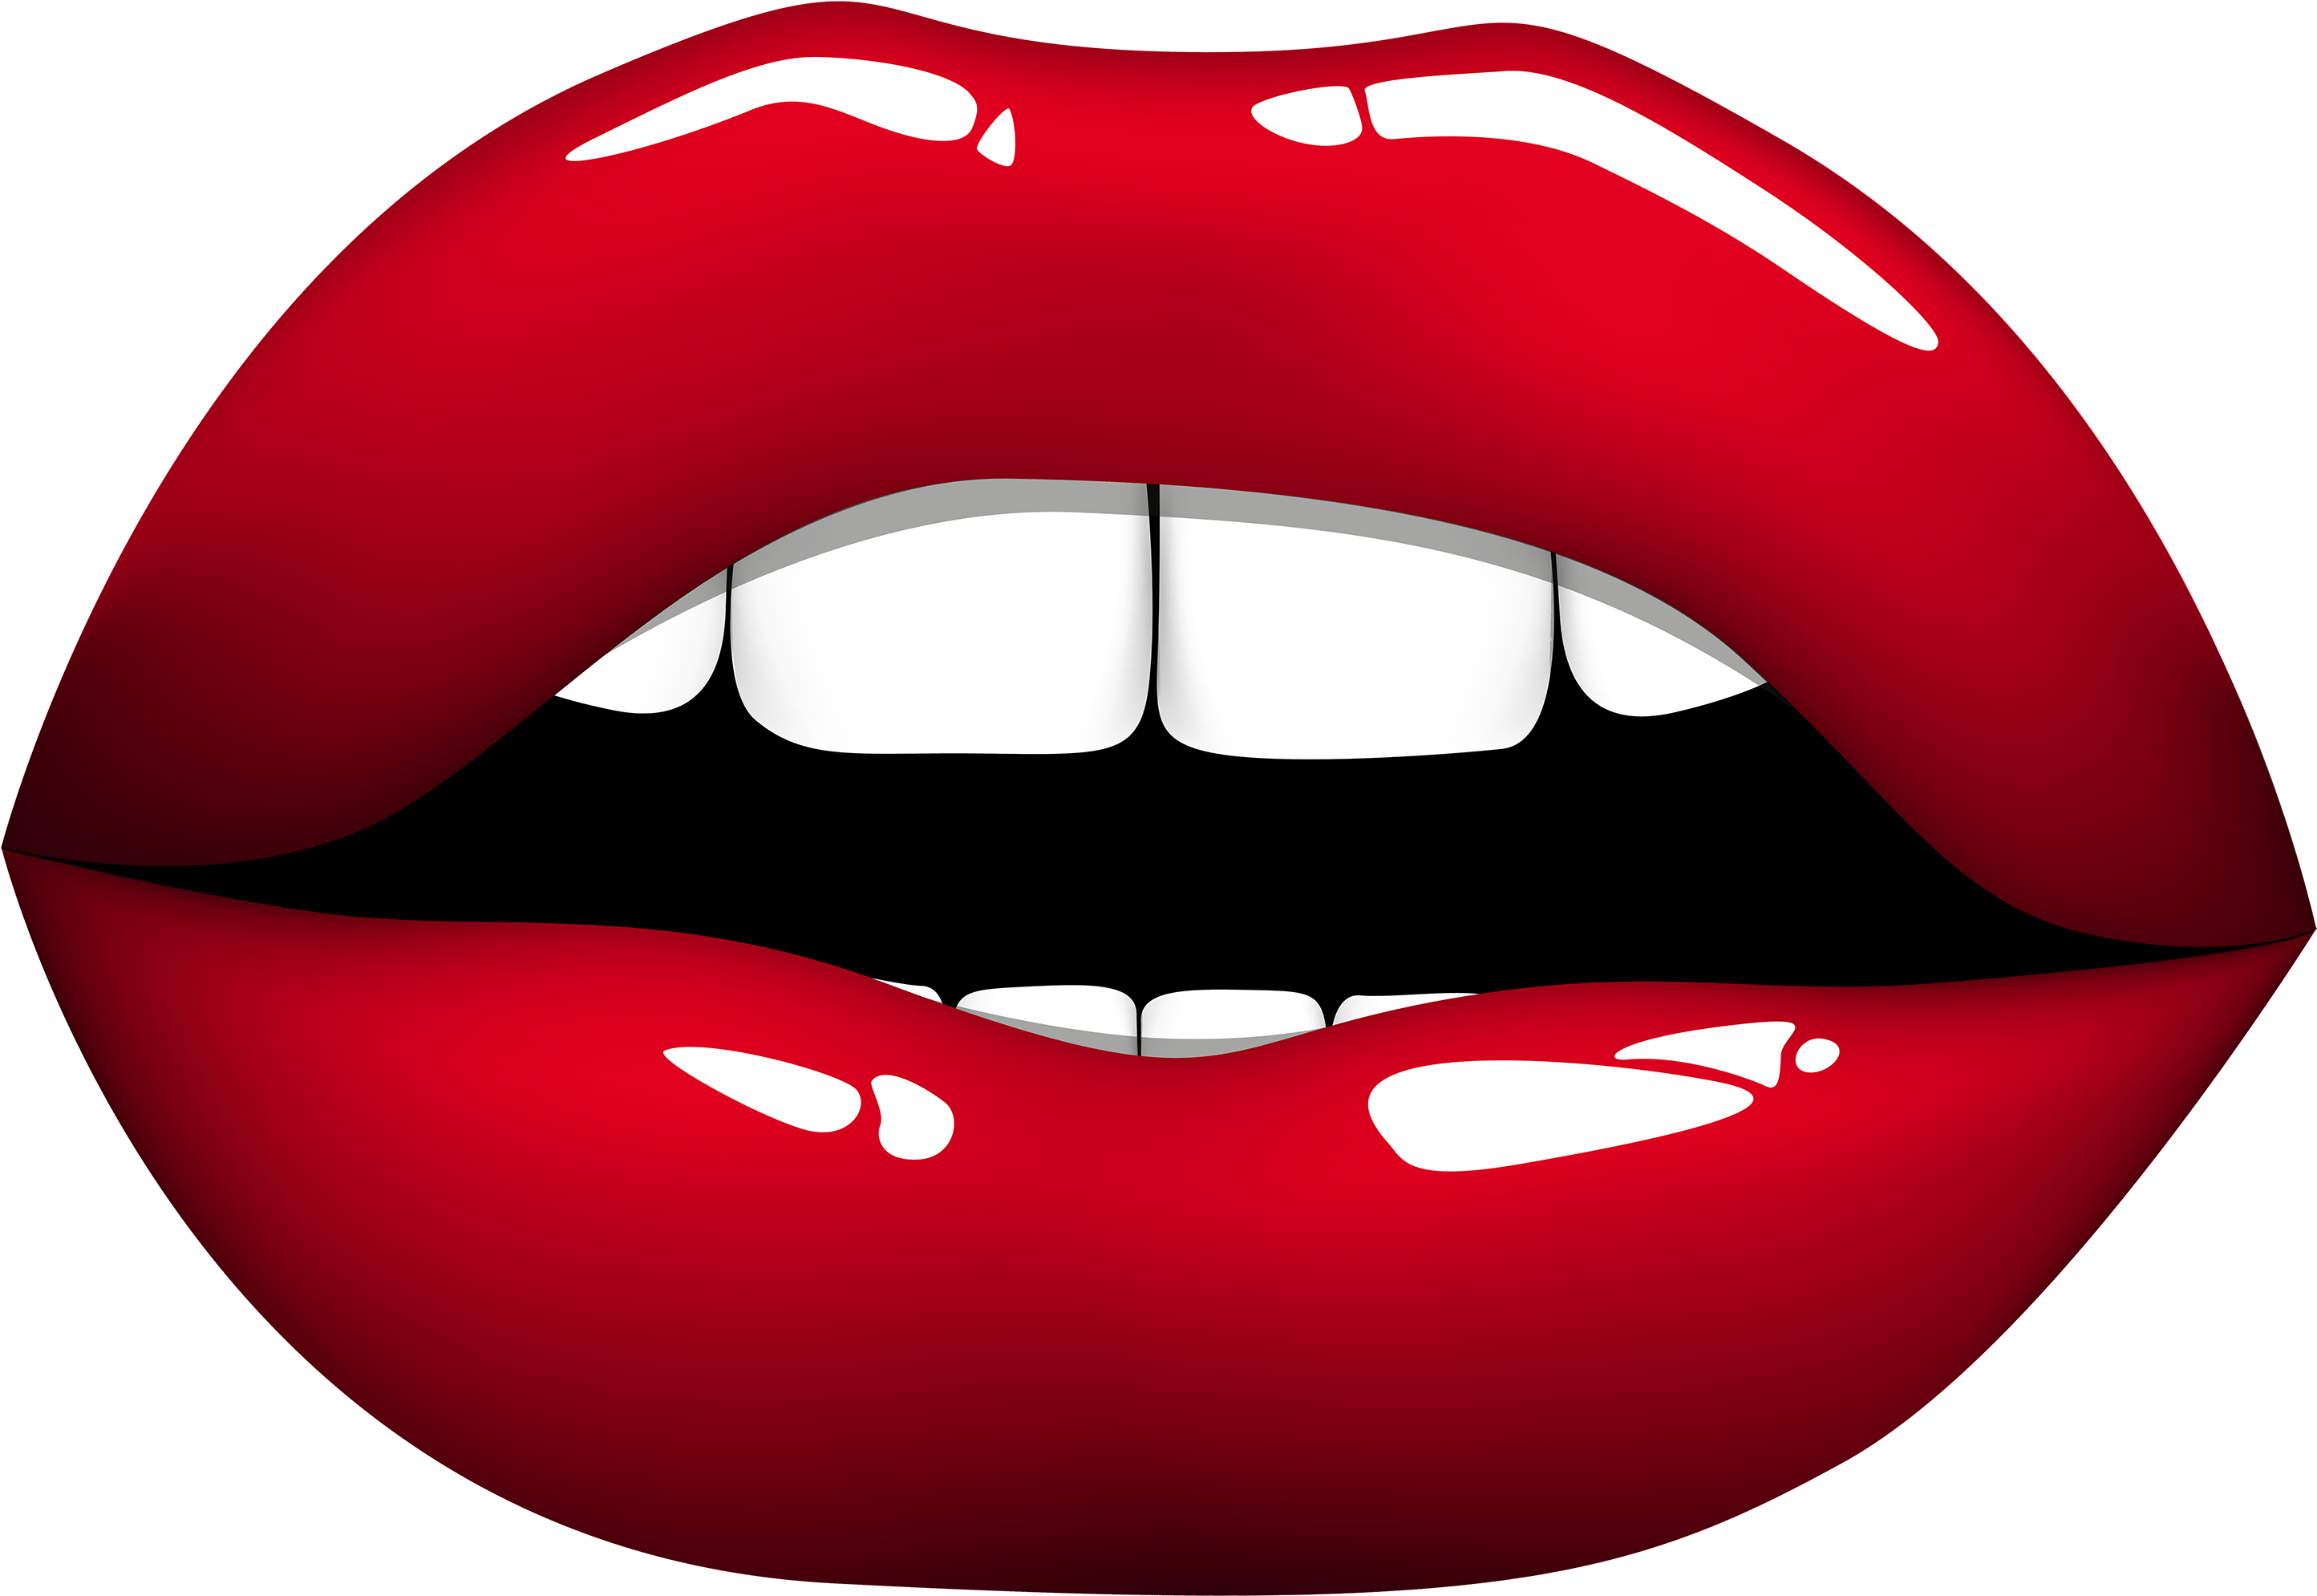 Glossy Red Lips Illustration